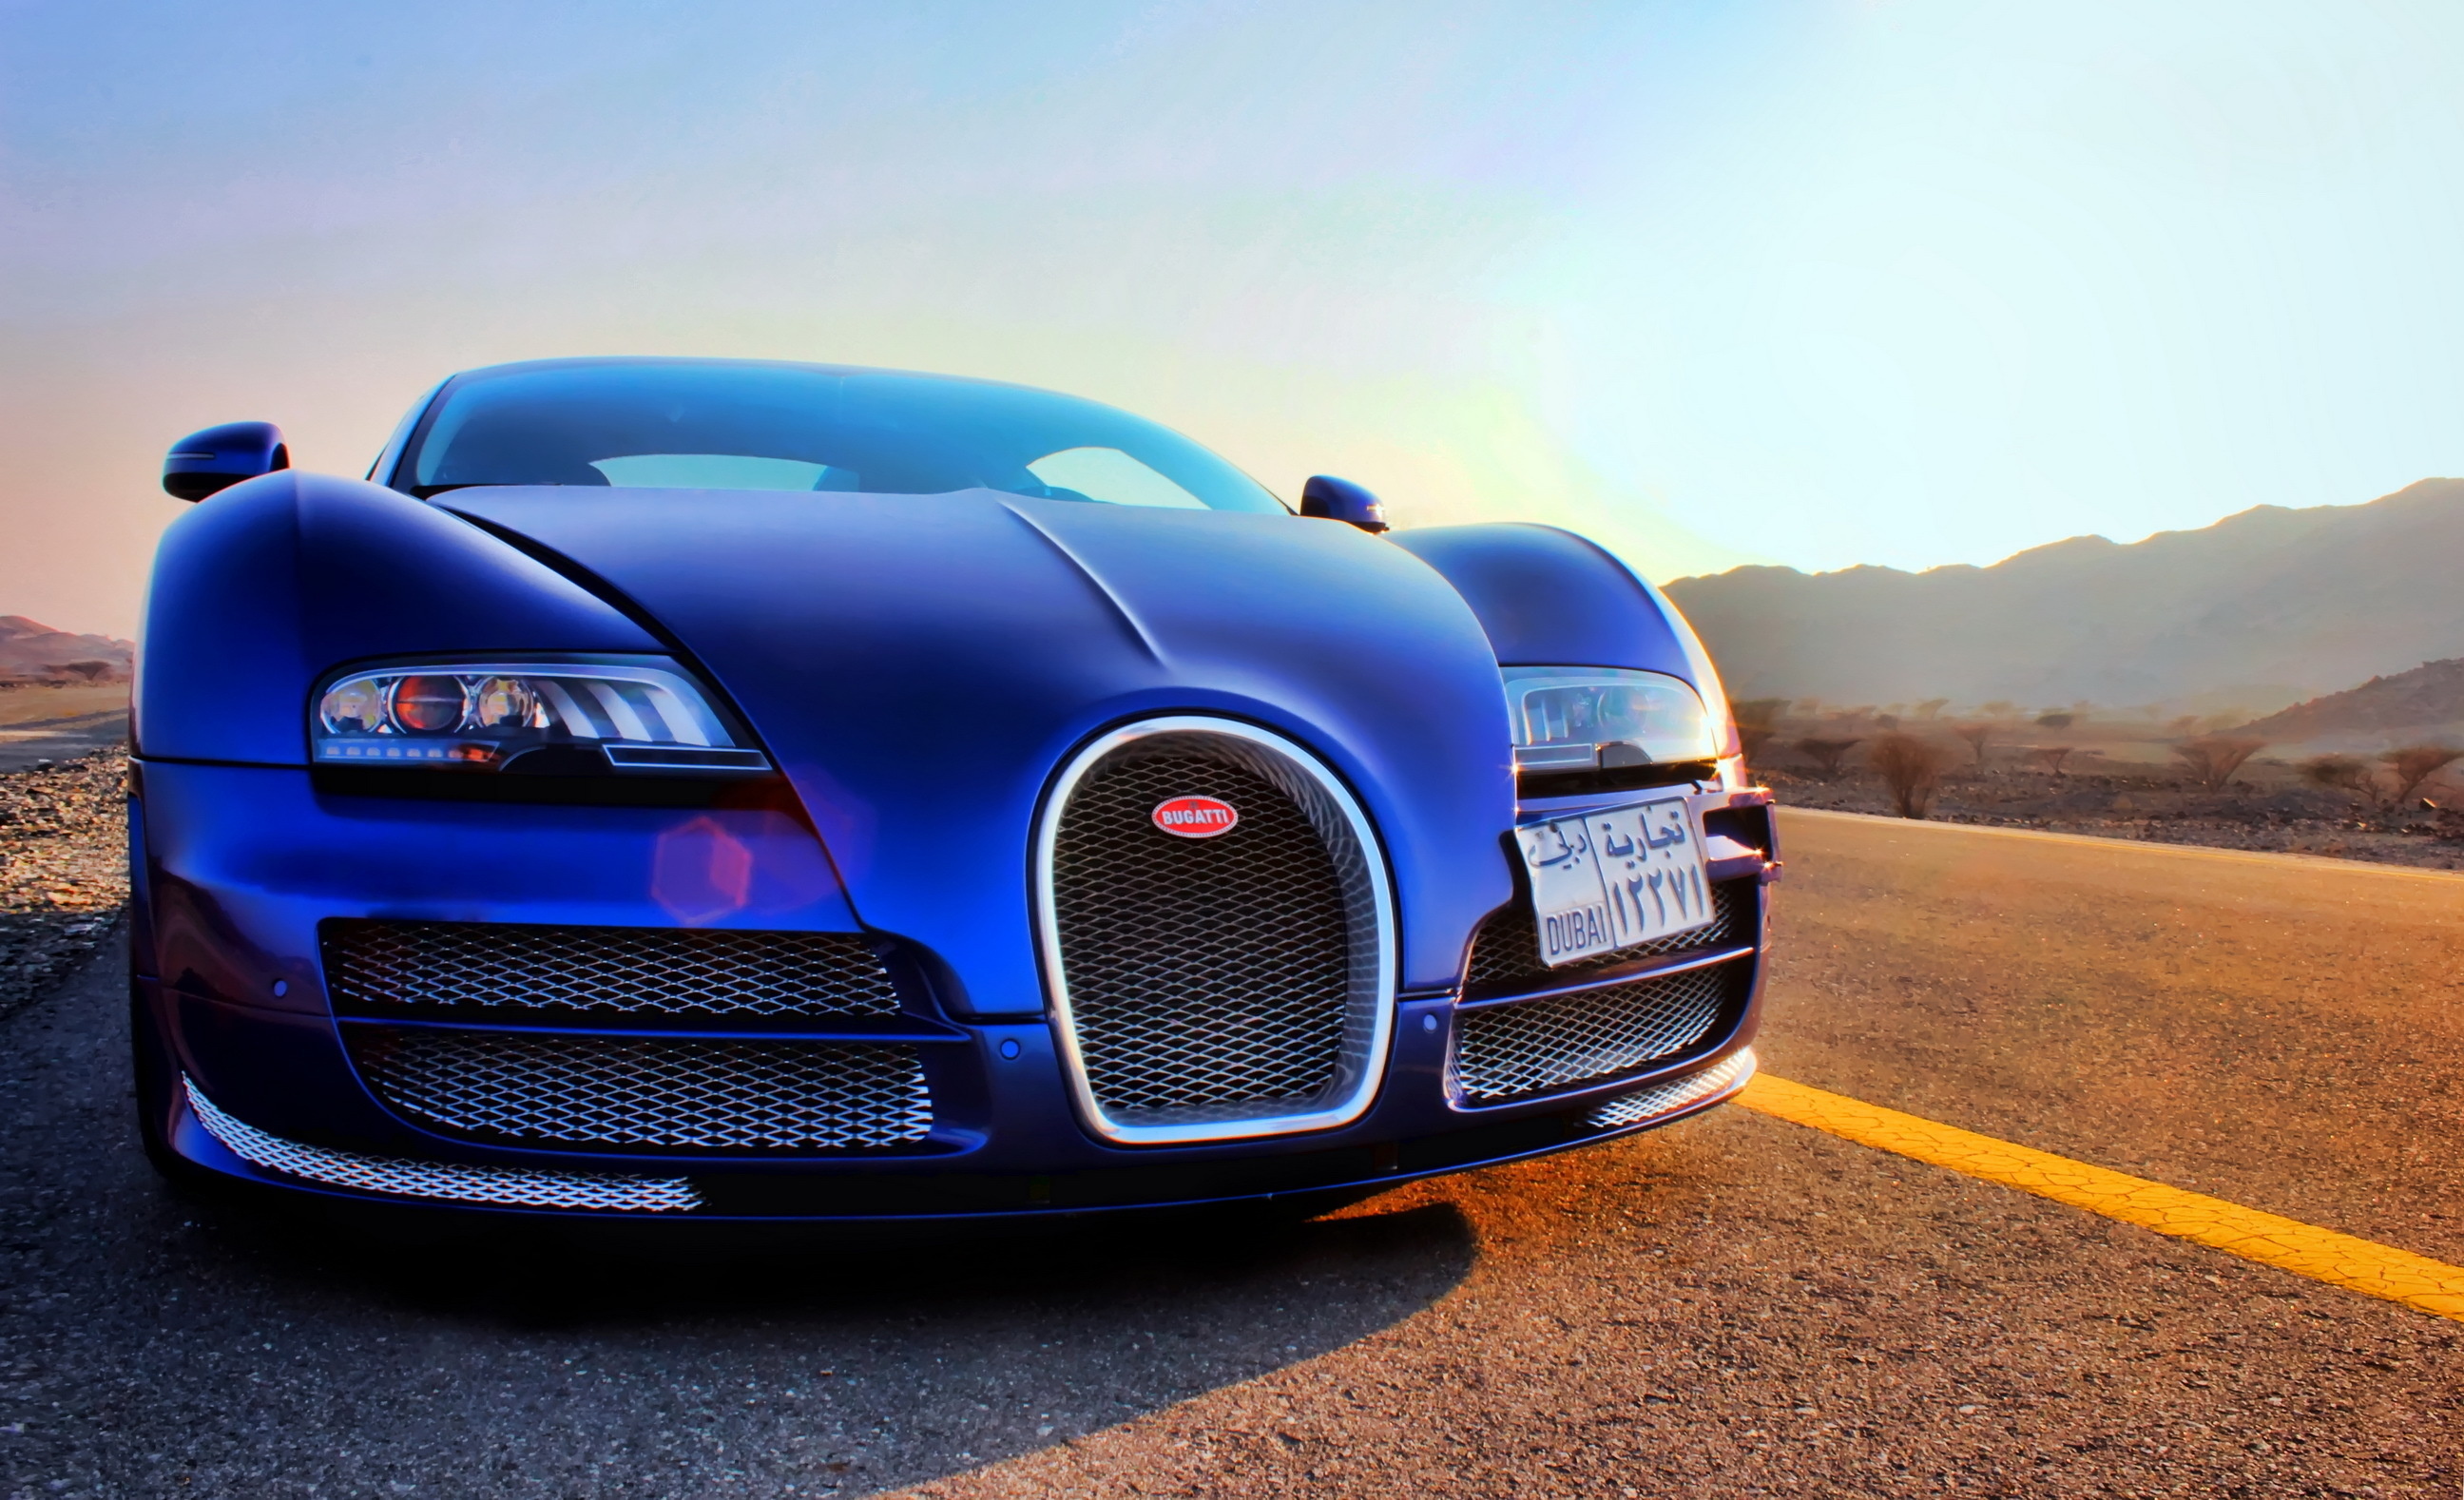 General 2592x1578 car blue cars road vehicle Bugatti United Arab Emirates Bugatti Veyron French Cars Volkswagen Group Hypercar